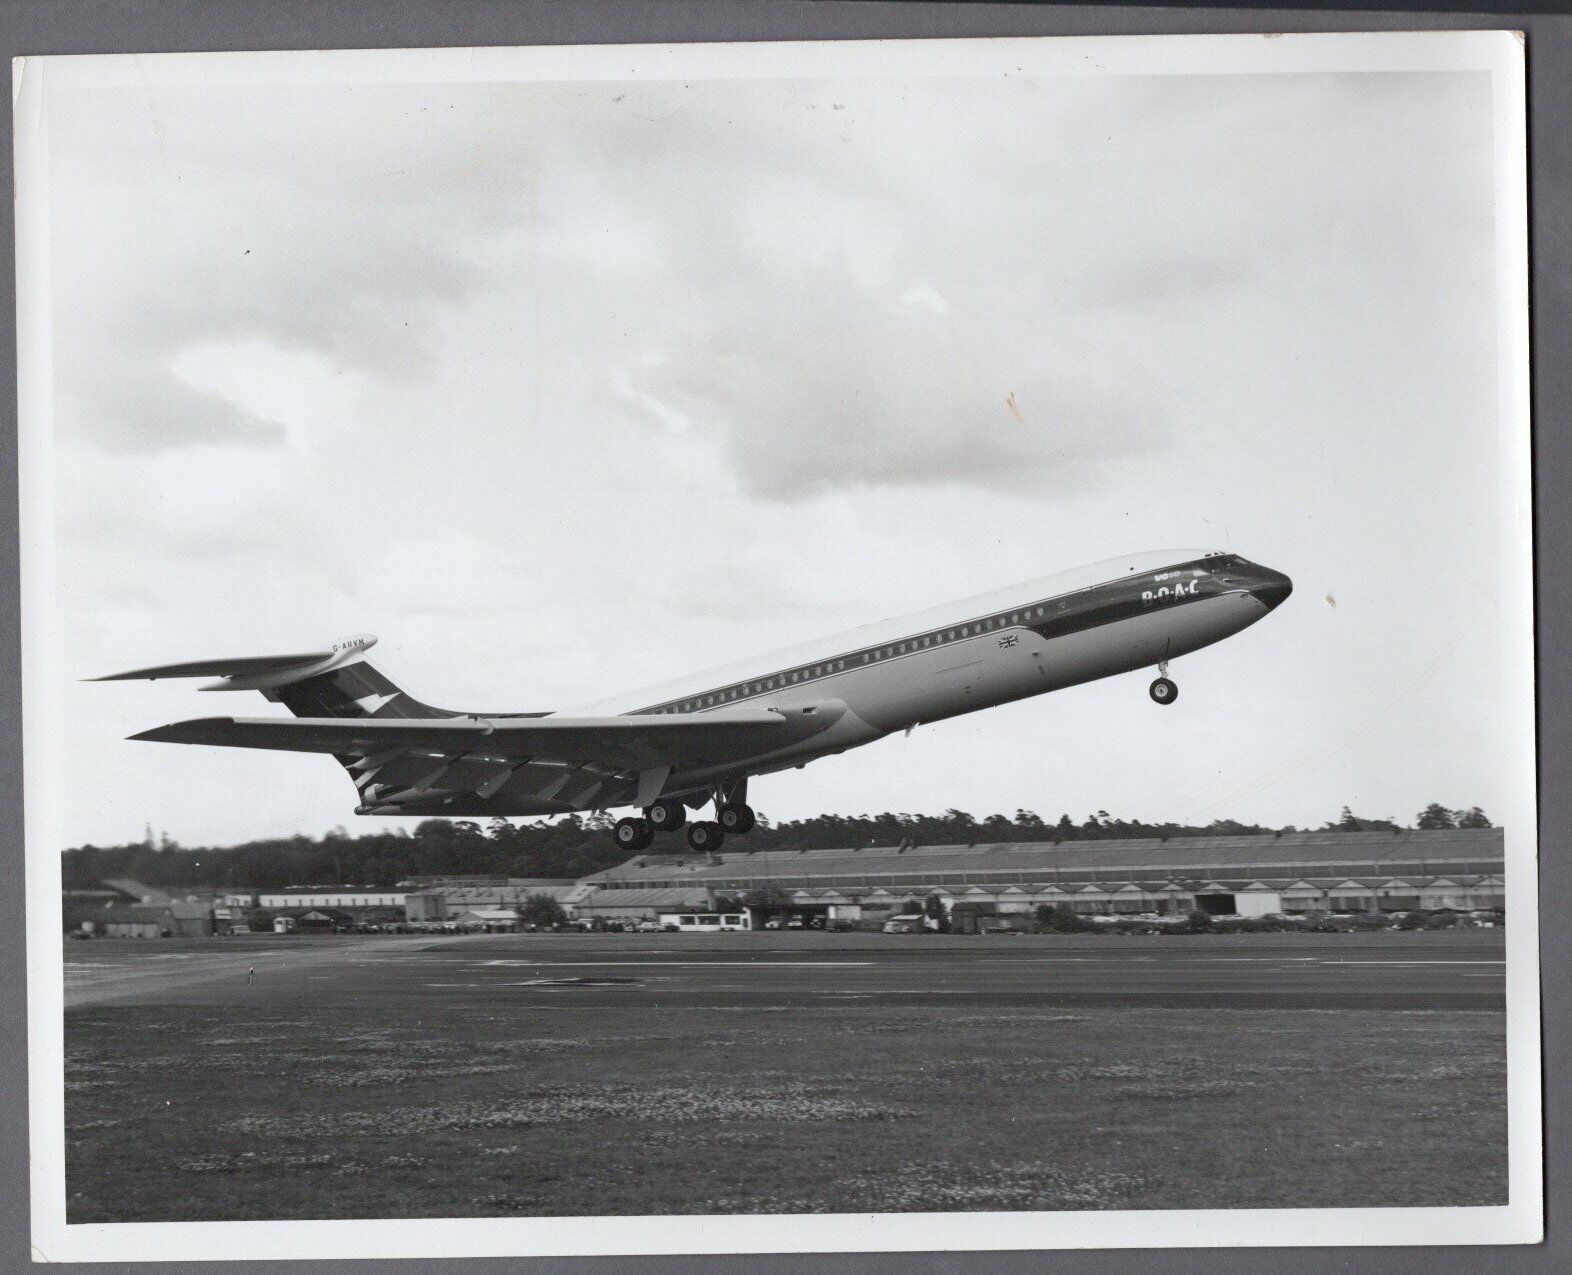 BOAC VICKERS VC10 WEYBRIDGE LARGE VINTAGE ORIGINAL MANUFACTURERS PHOTO 8